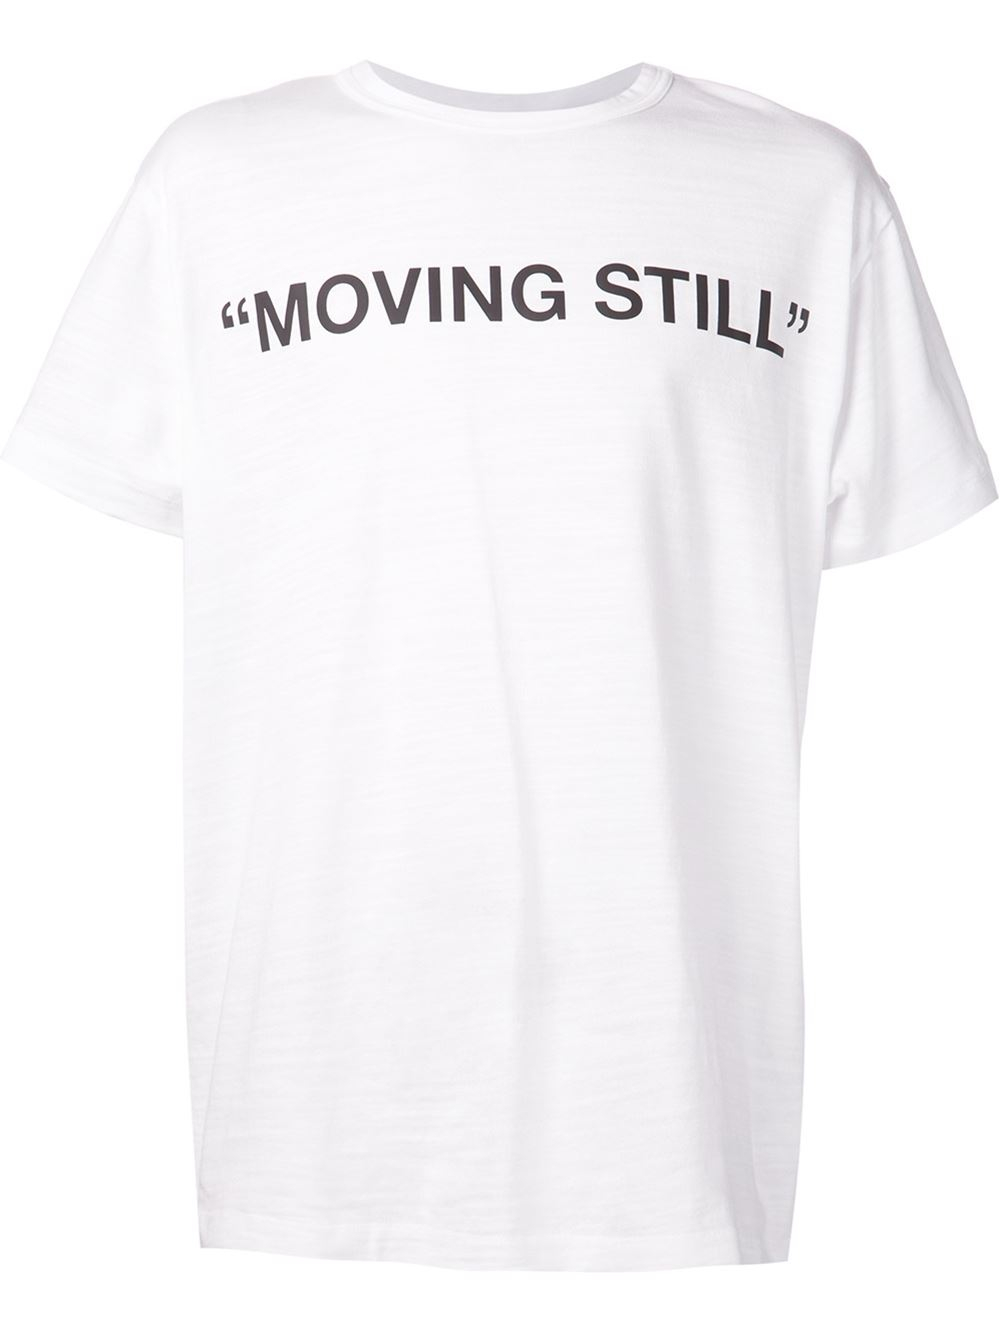 Off-White c/o Virgil Abloh Moving Still Cotton-Jersey T-Shirt in White for  Men - Lyst